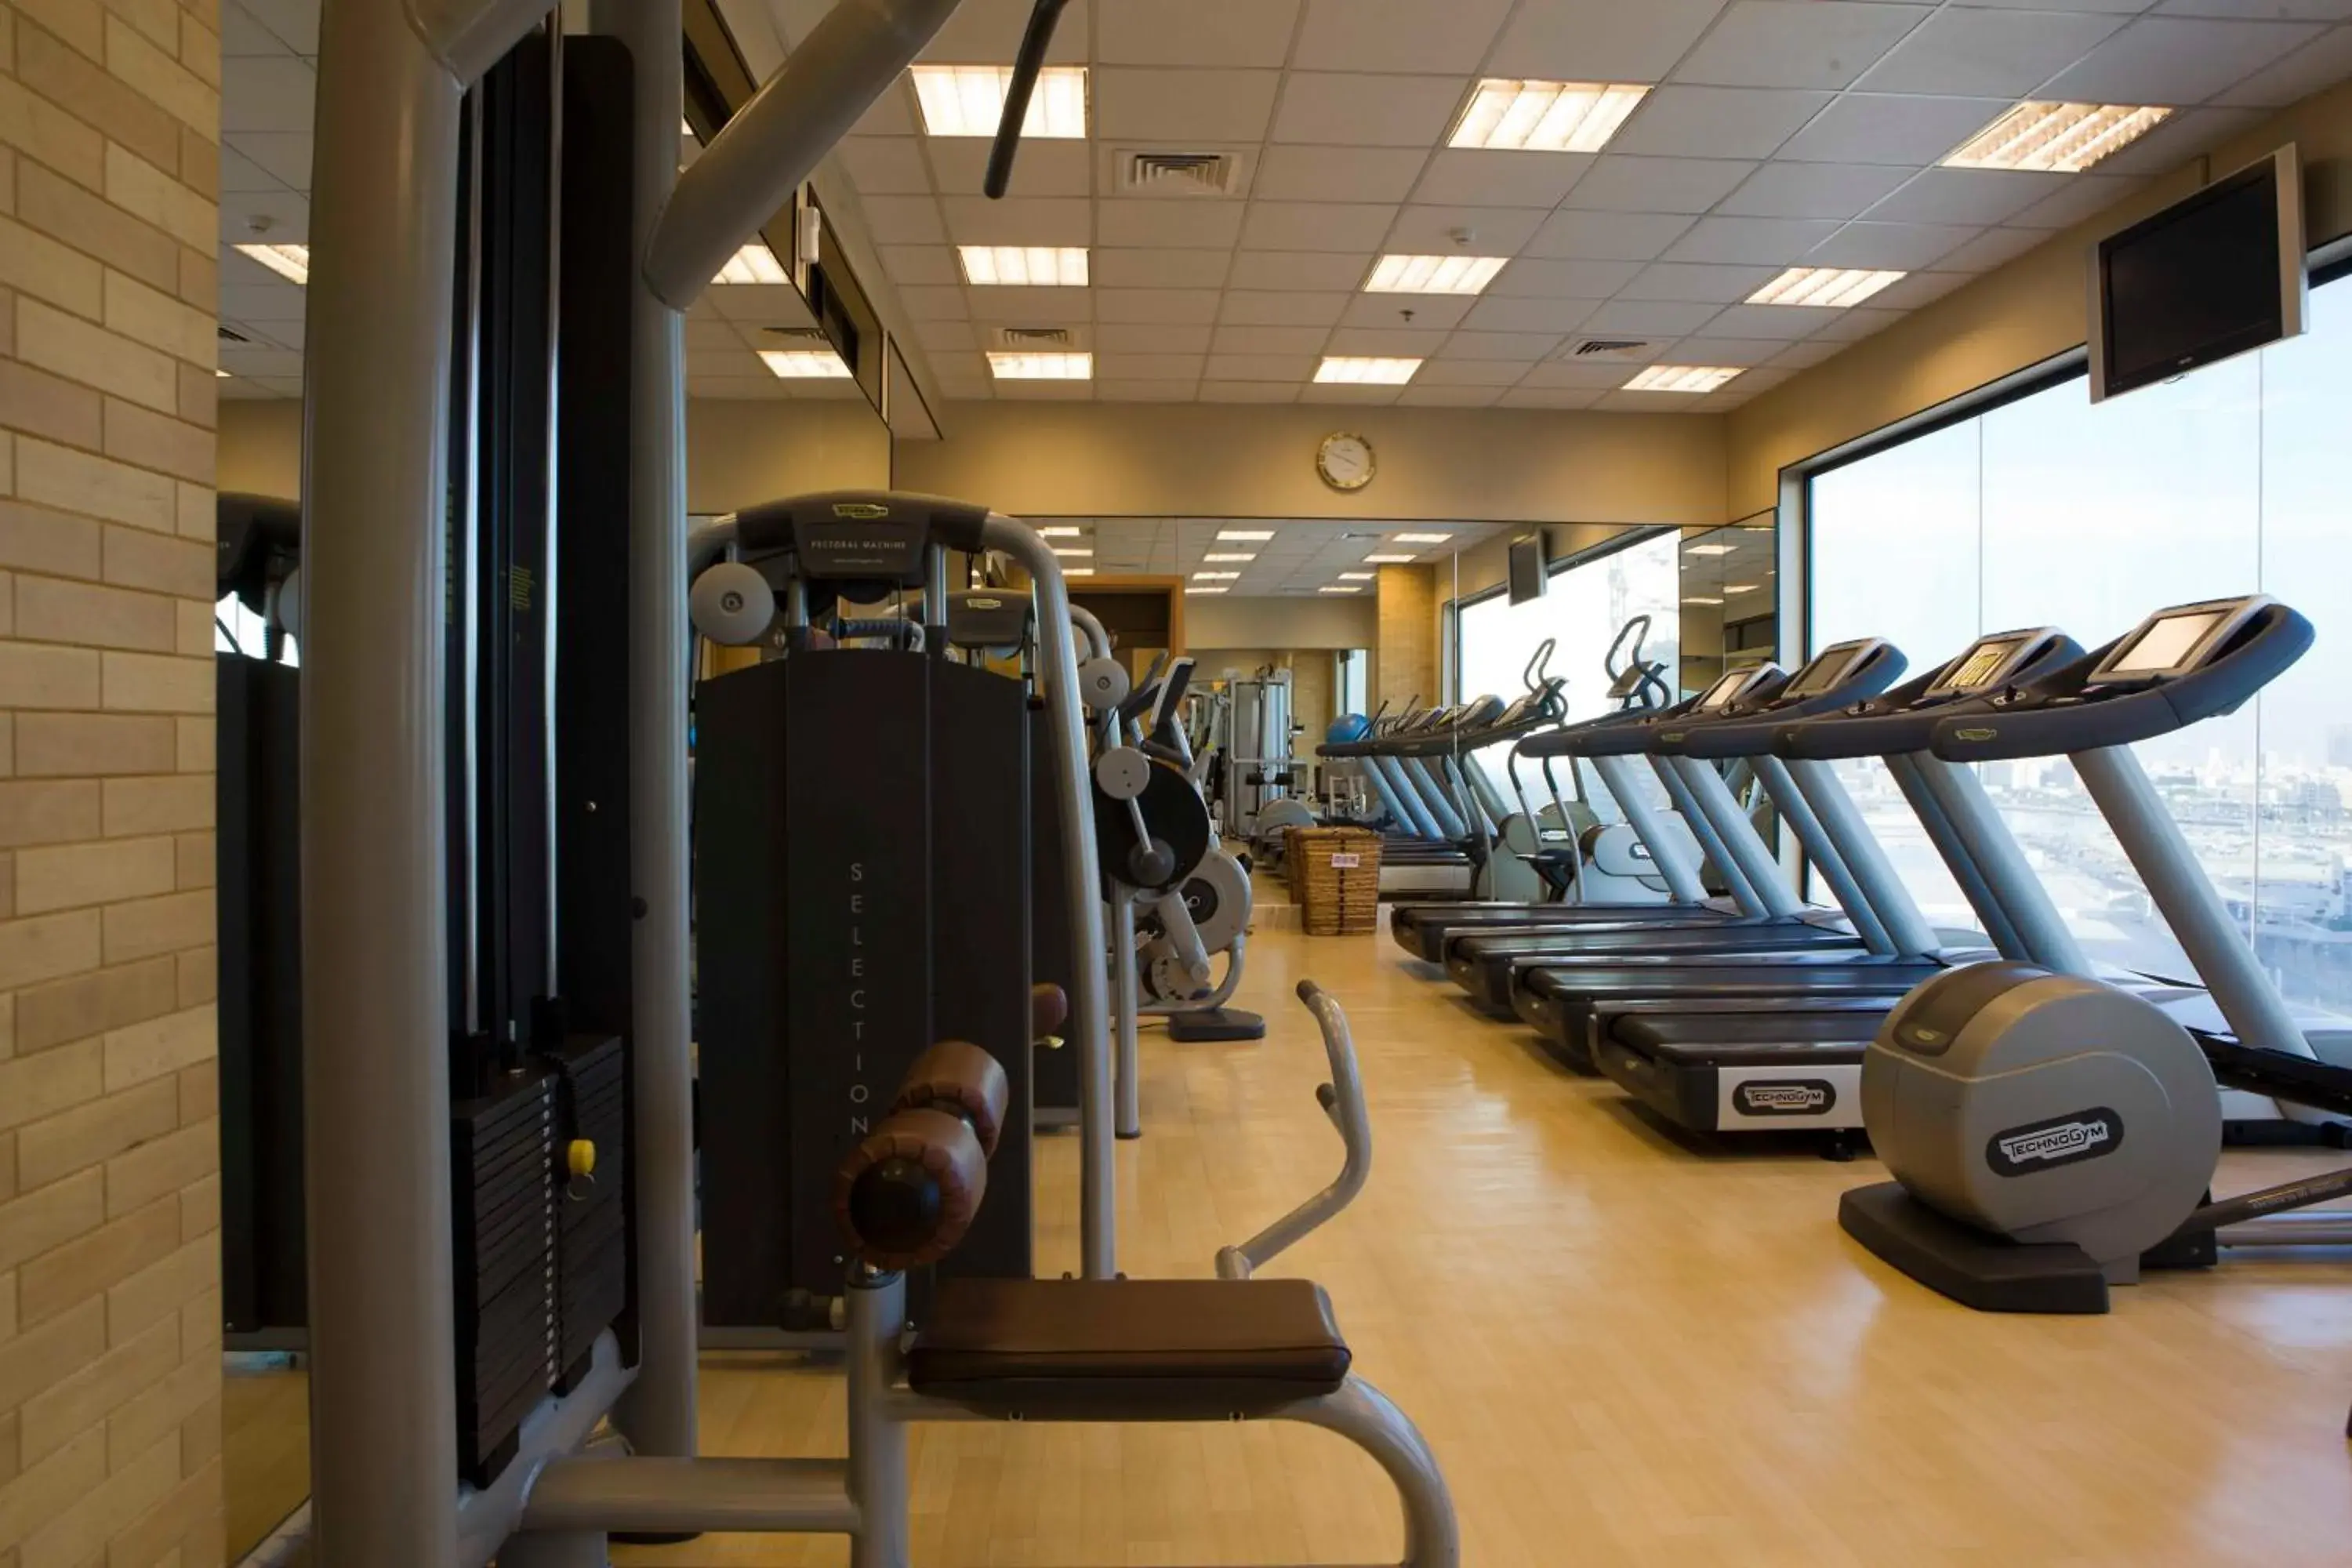 Fitness centre/facilities, Fitness Center/Facilities in Elite Grande Hotel